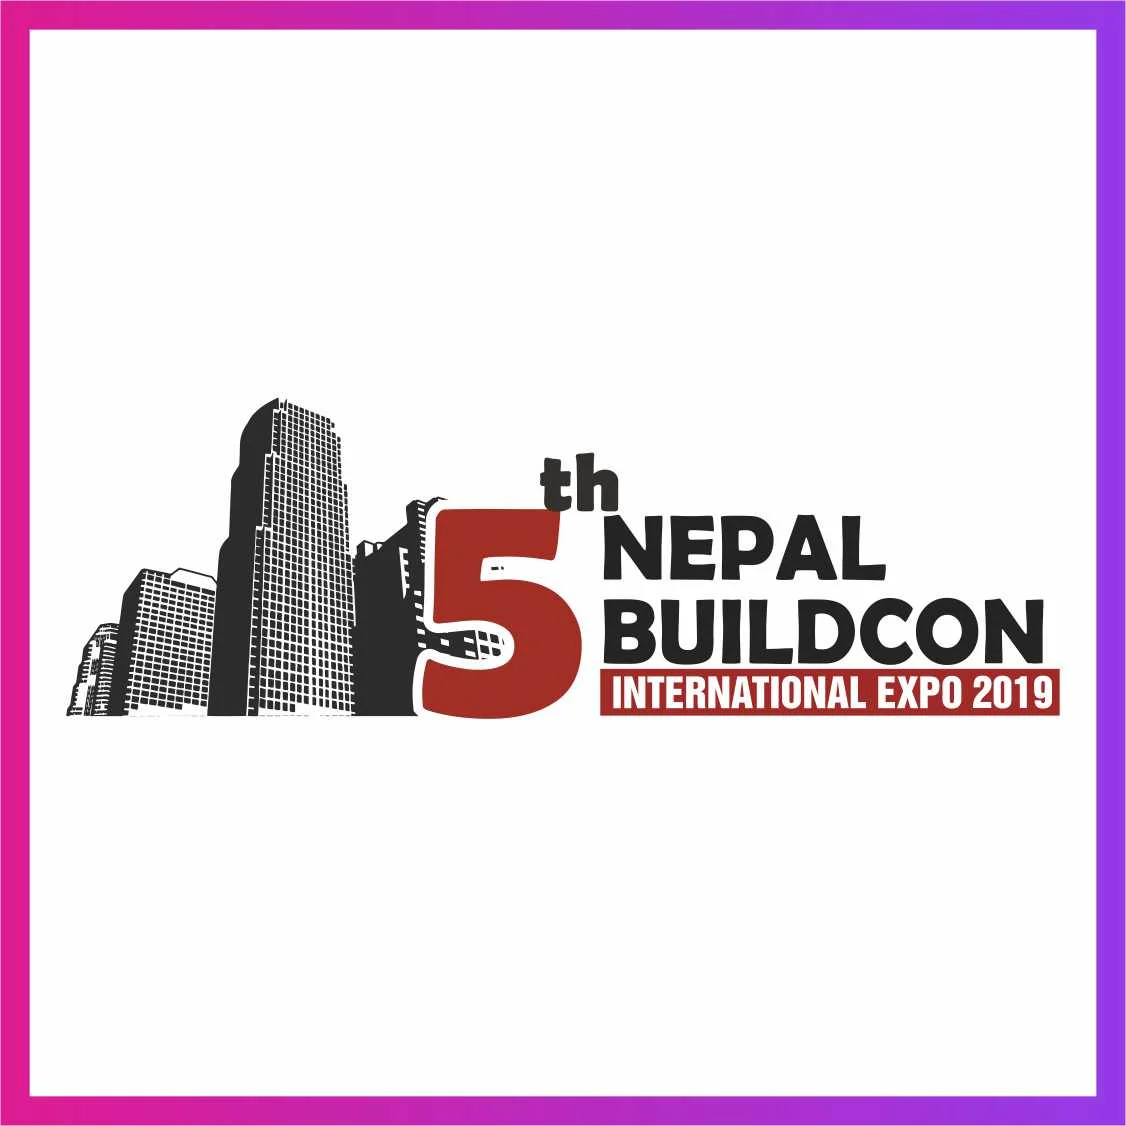 Nepal Buildcon International Expo 2019